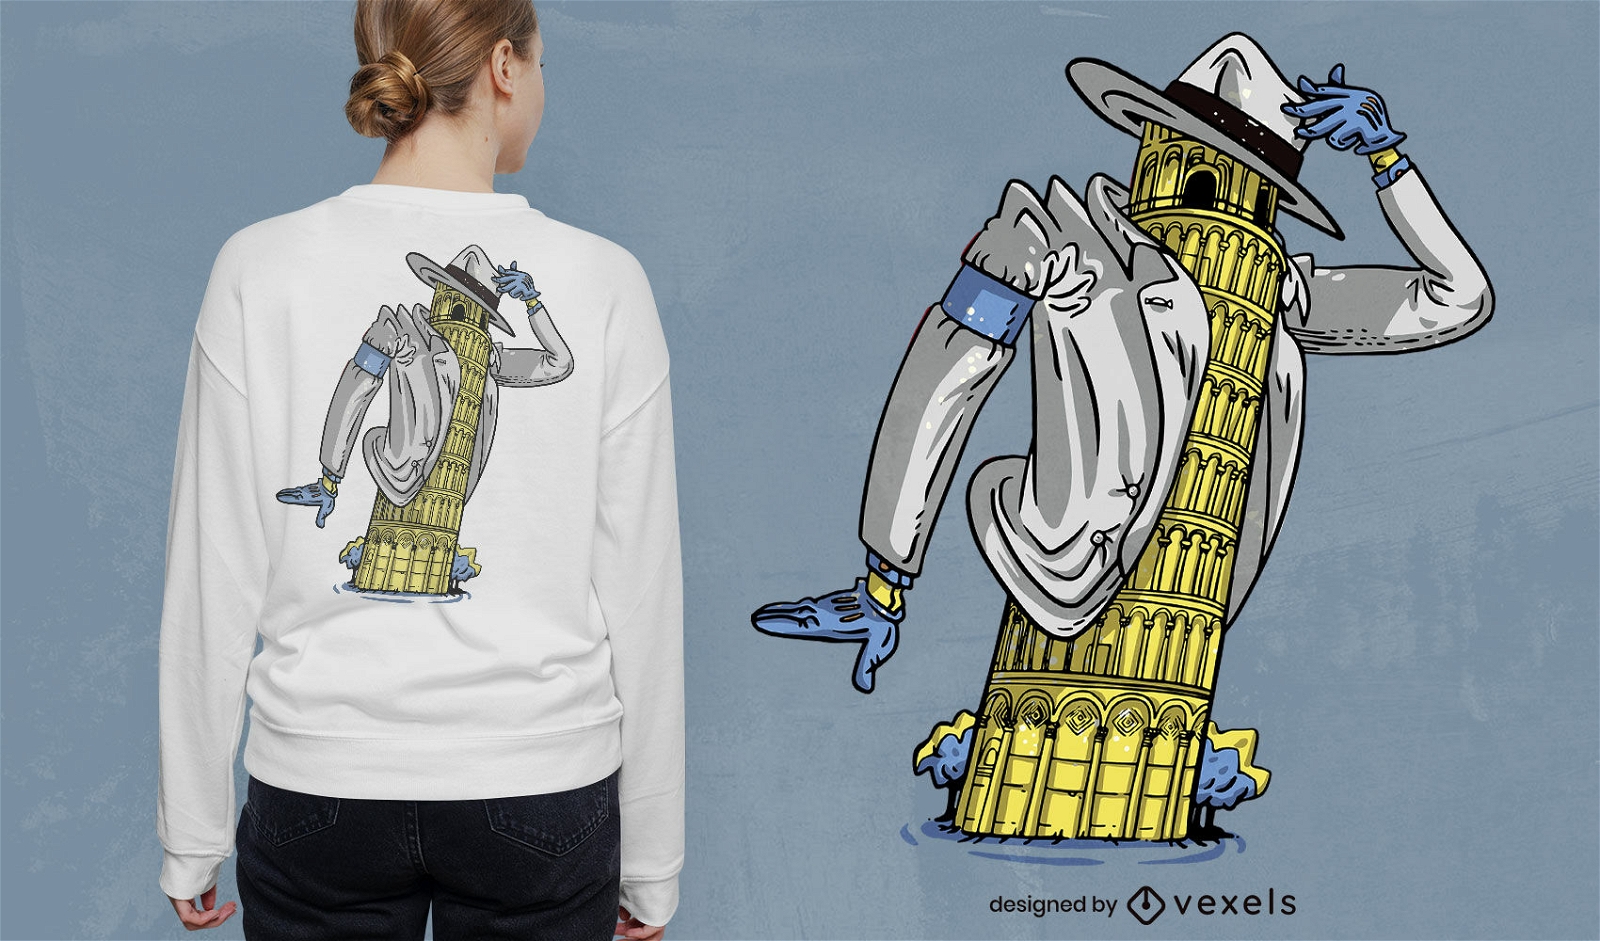 Diseño de camiseta de parodia de la torre de Pisa del artista pop